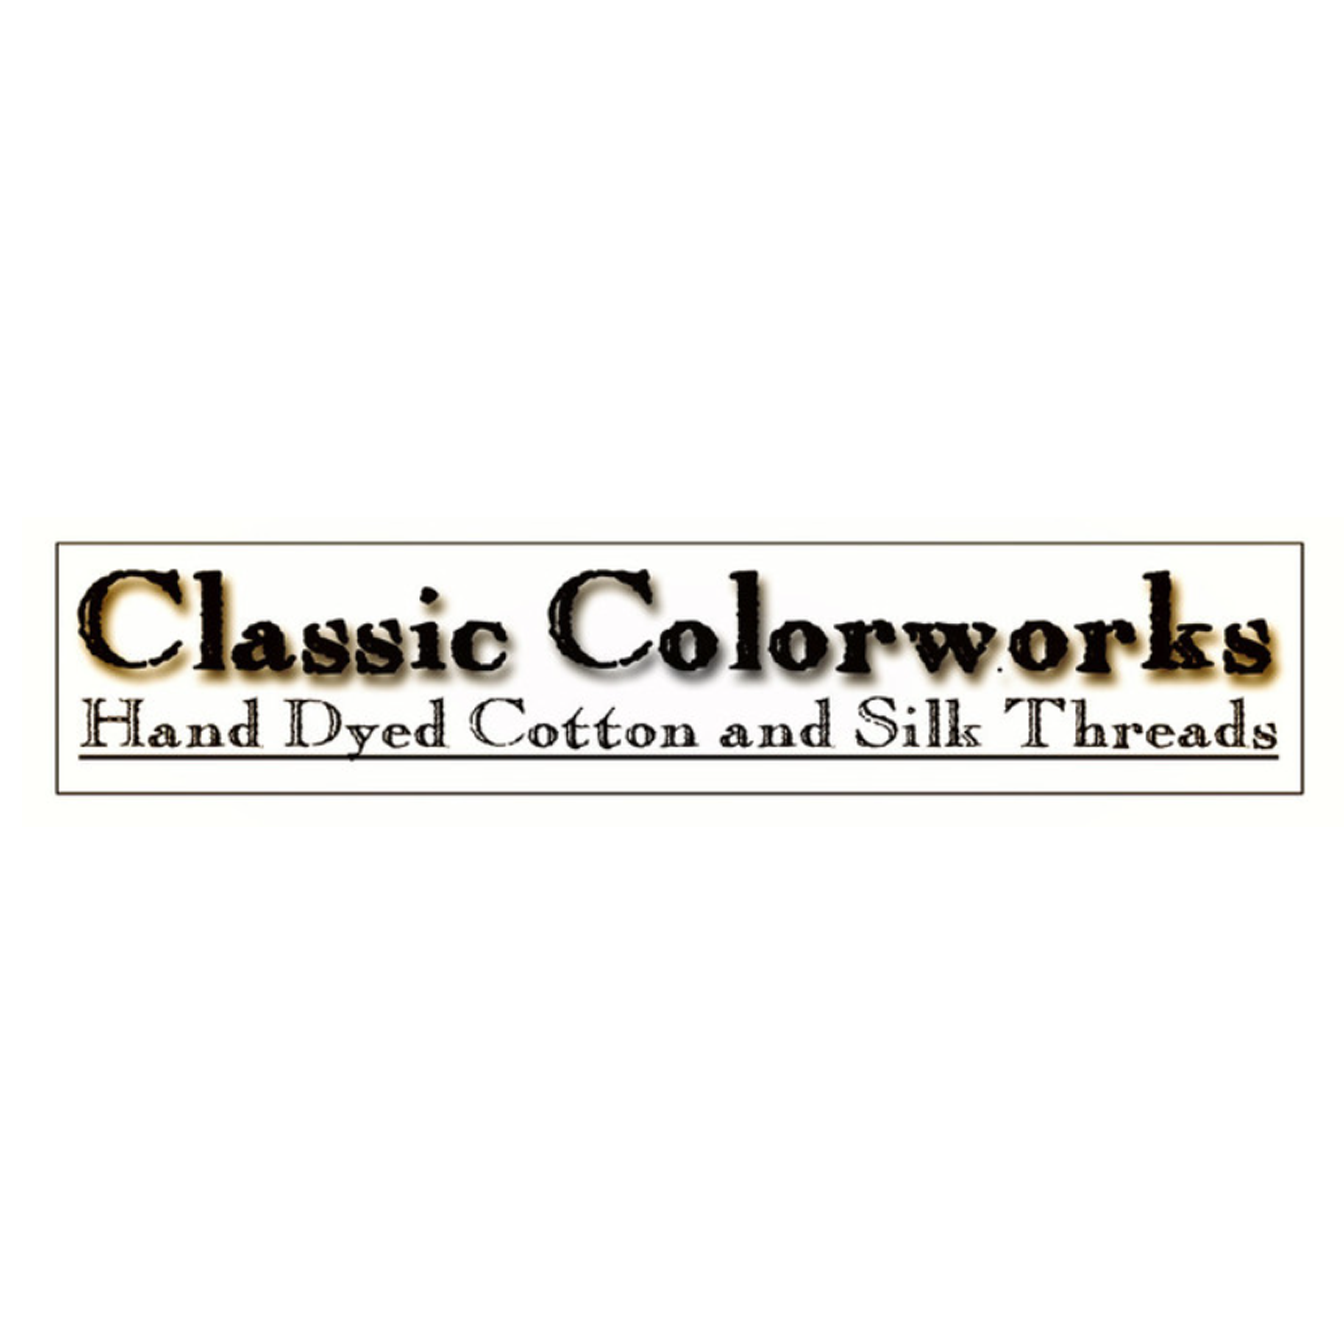 Classic Colorworks Thread